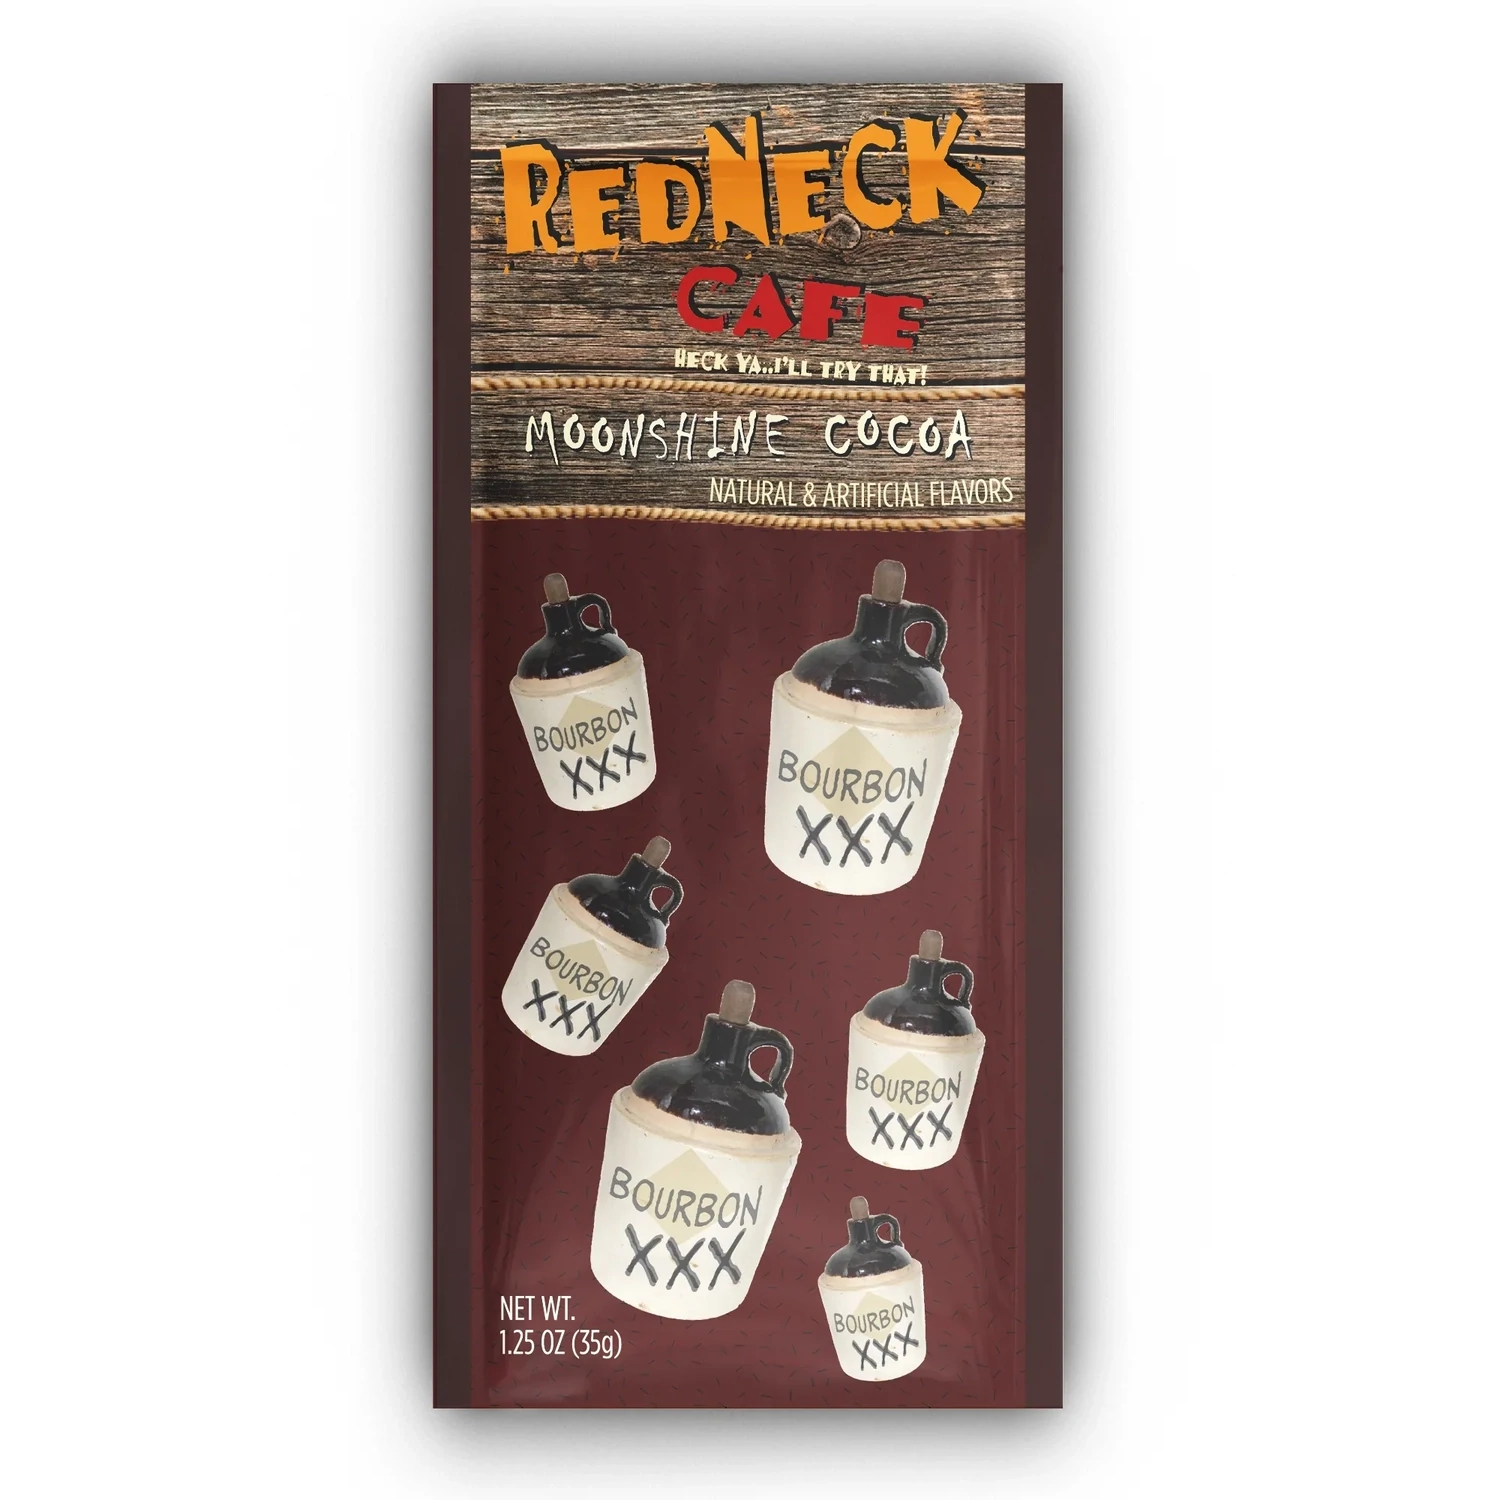 Redneck Cafe Moonshine Bourbon Cocoa Packet